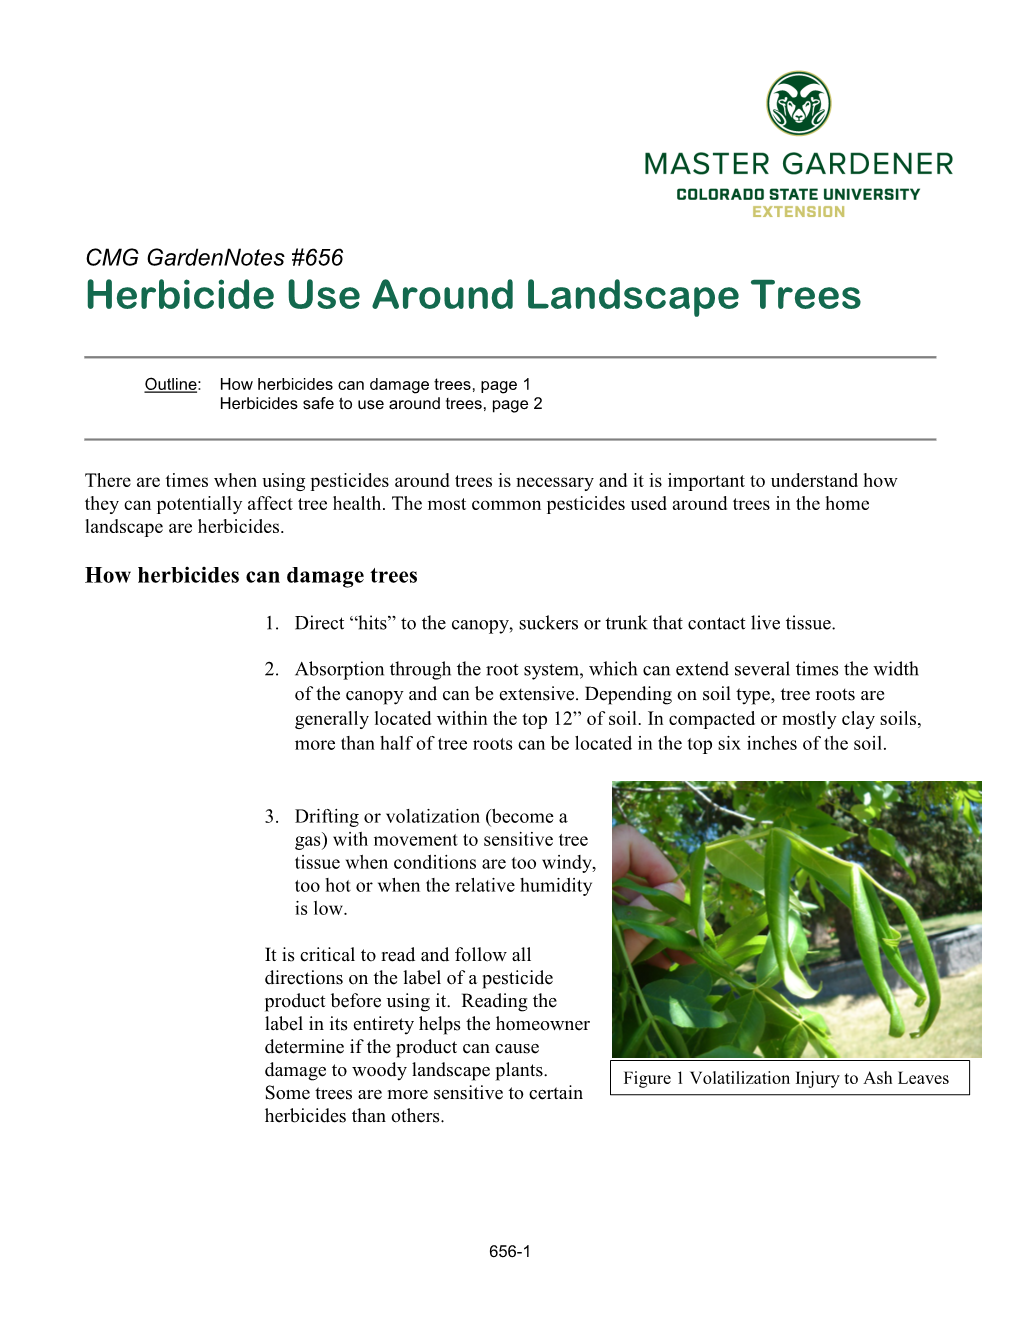 Herbicide Use Around Landscape Trees